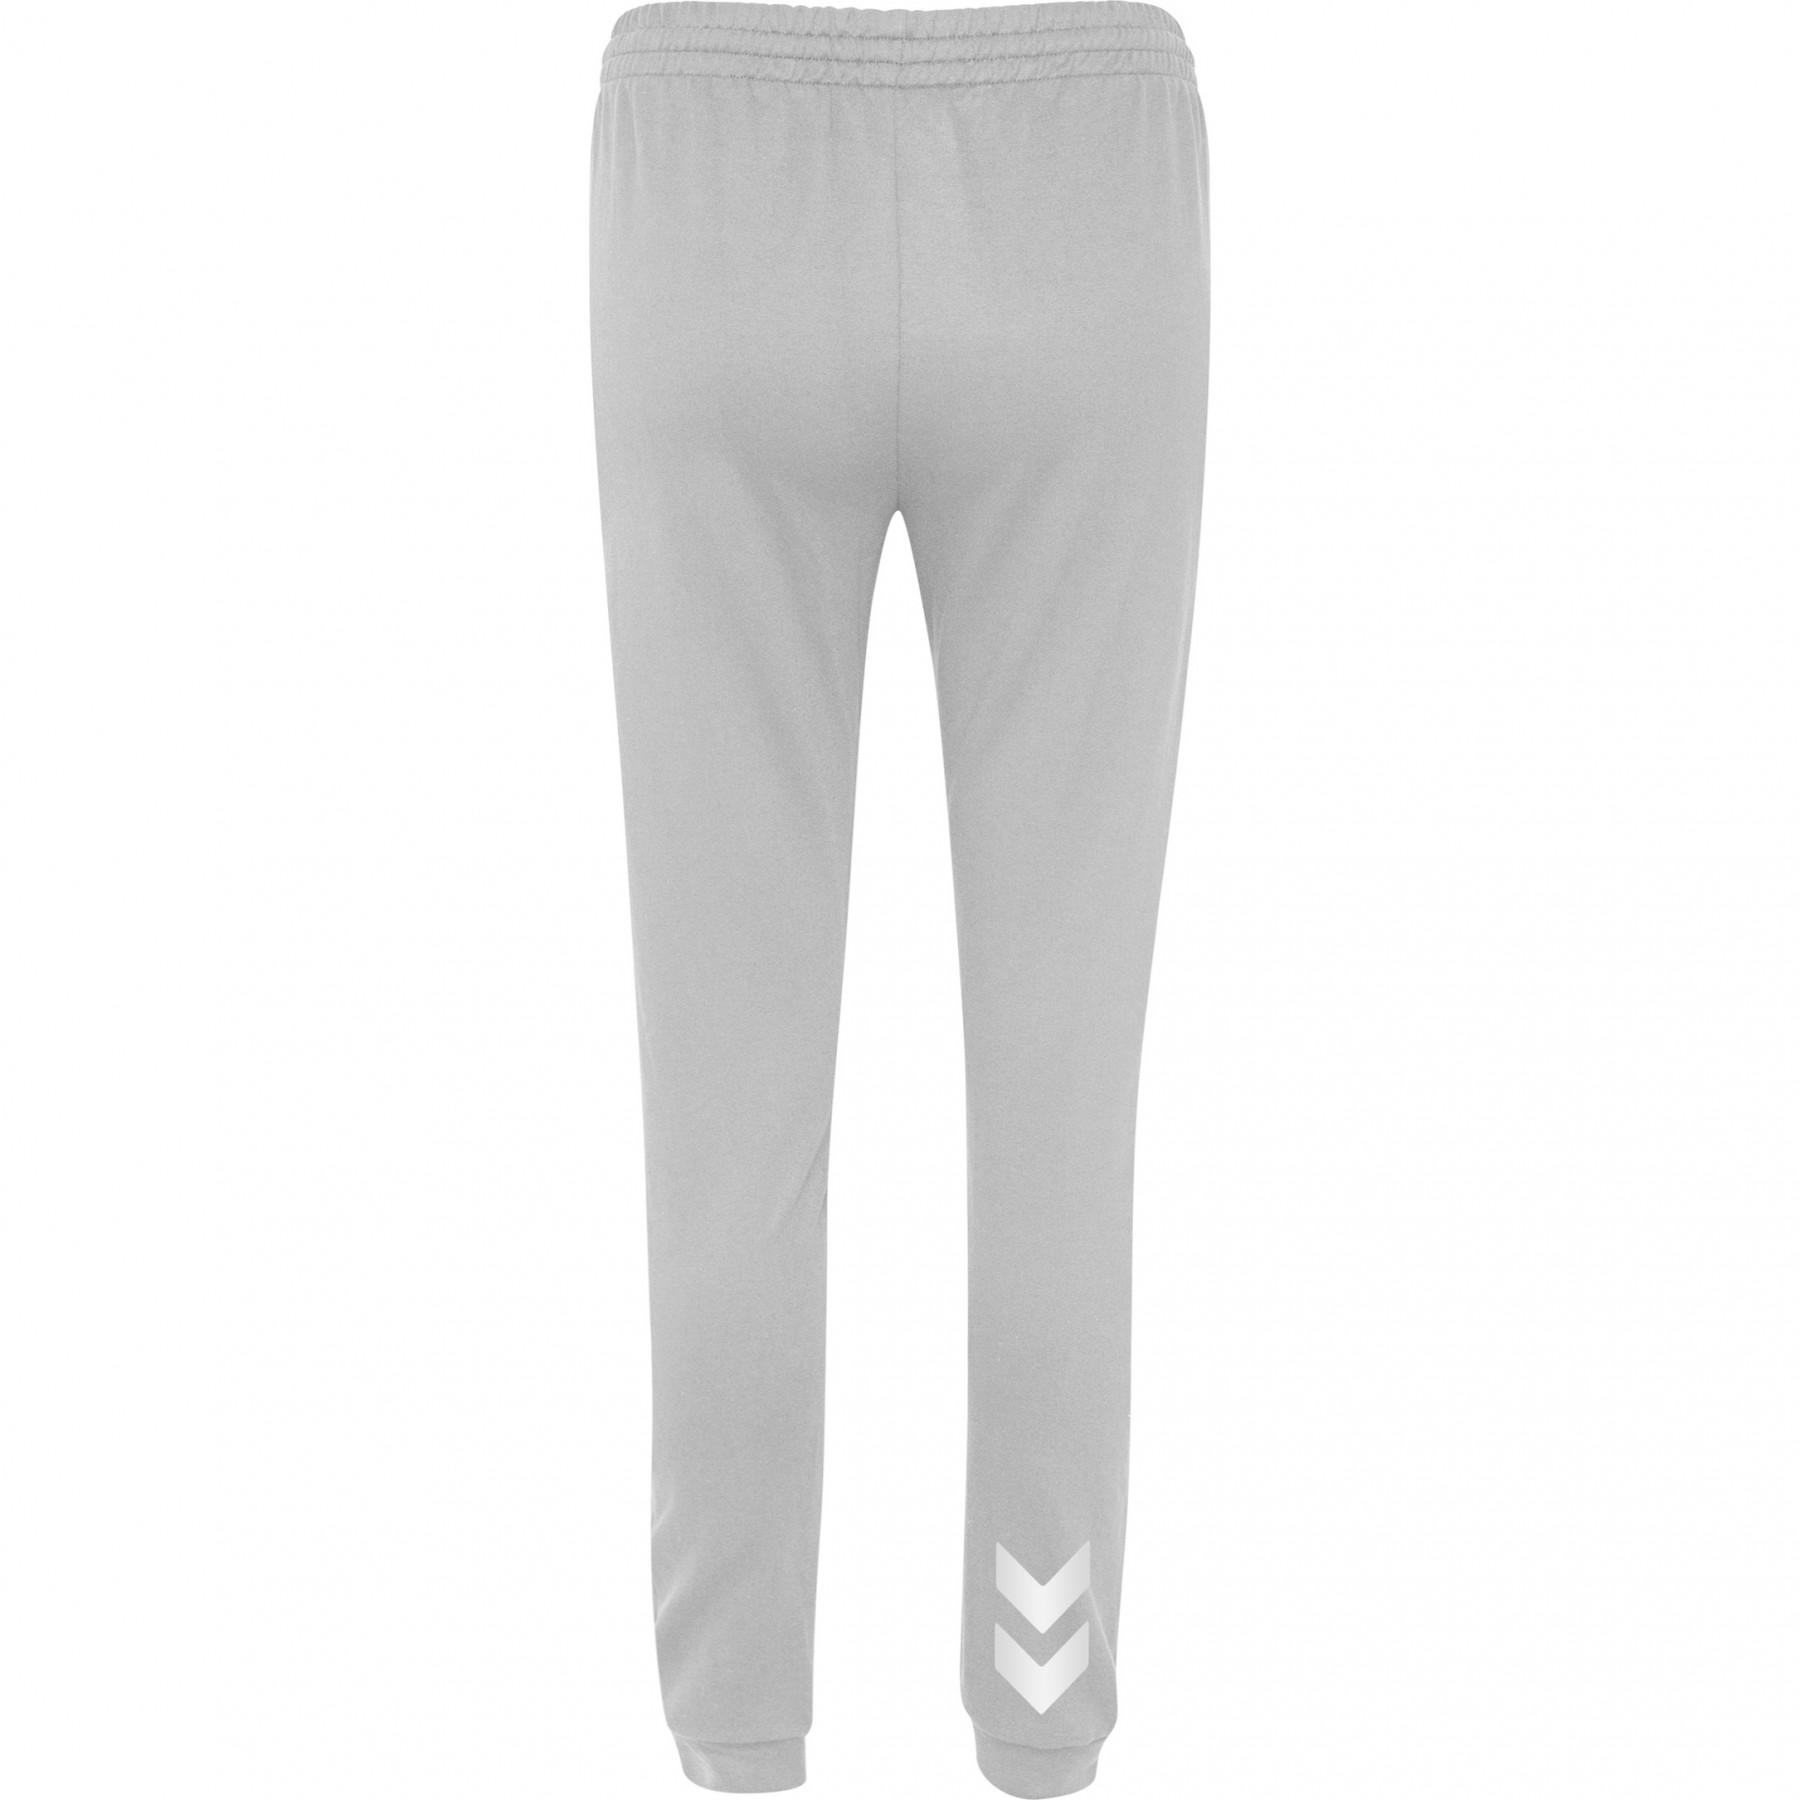 Women's trousers Hummel hmlGO cotton